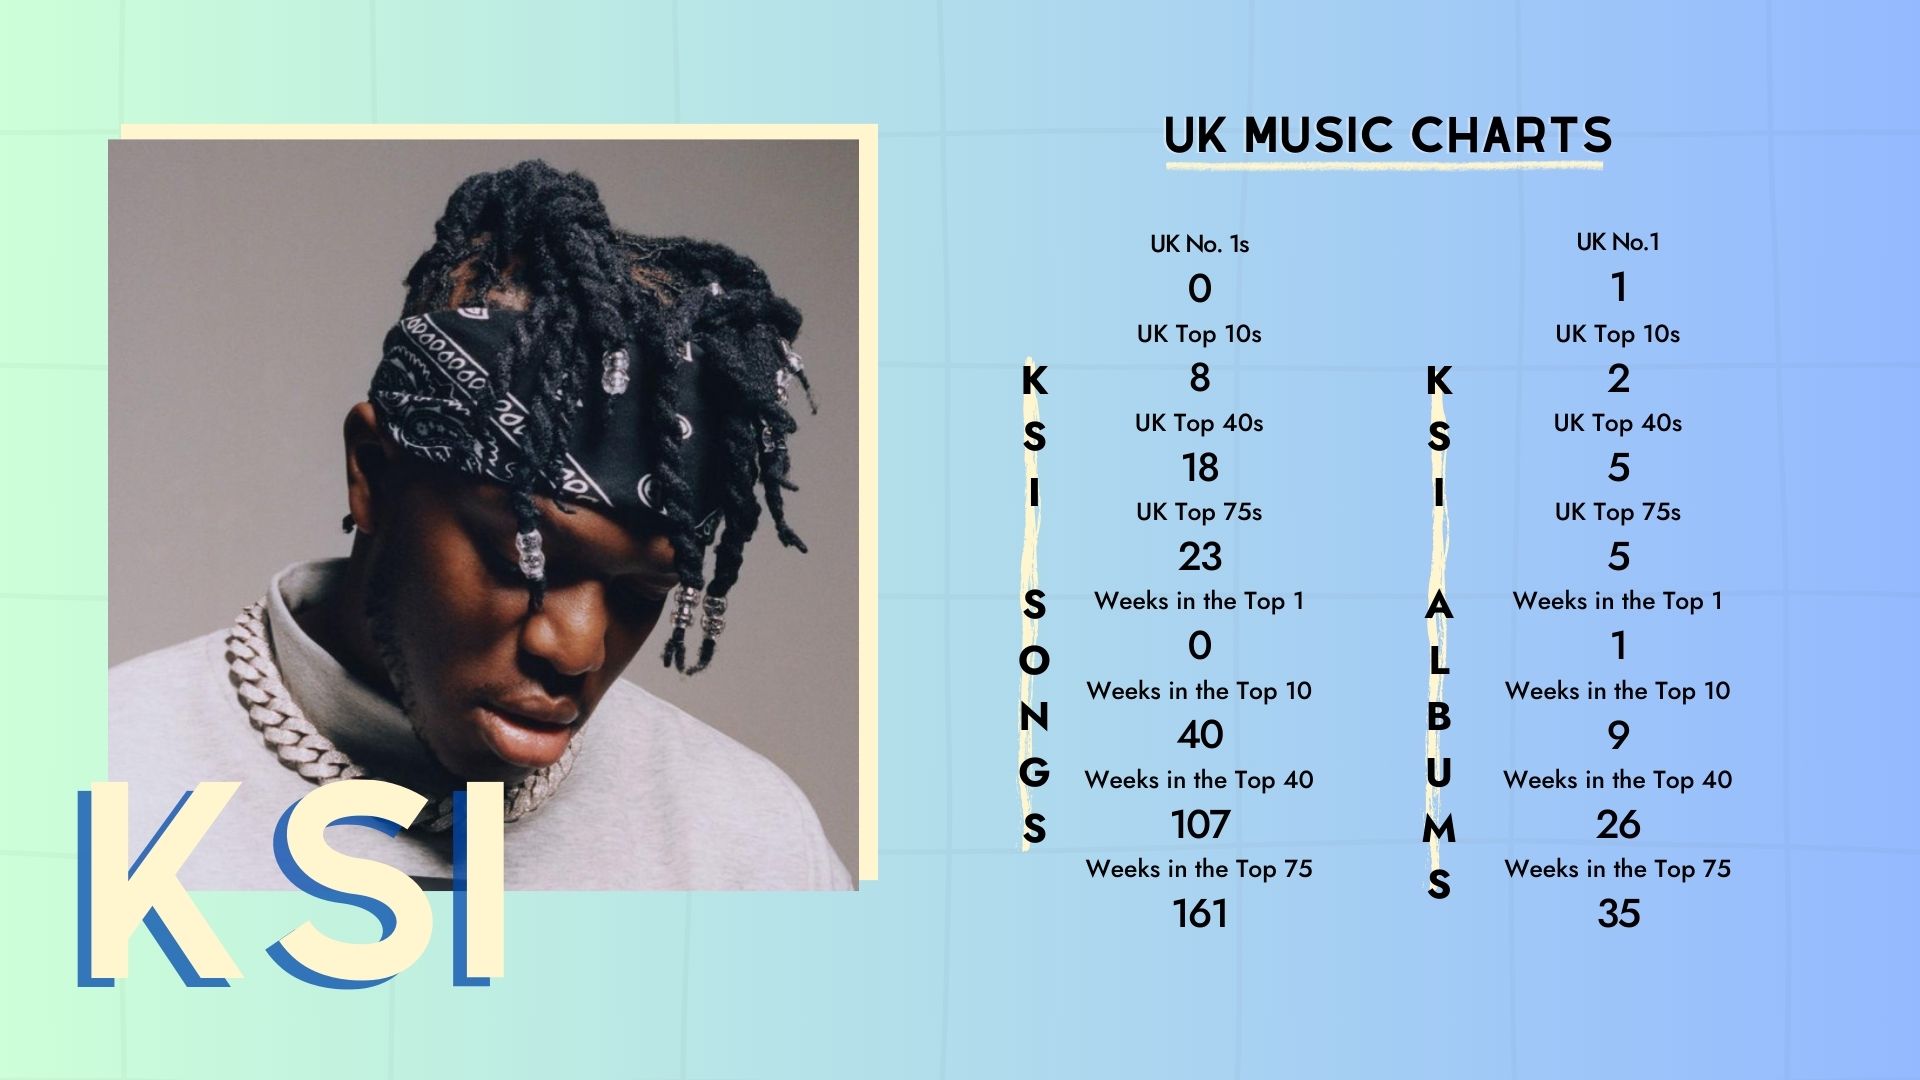 KSI UK Music Chart performance.